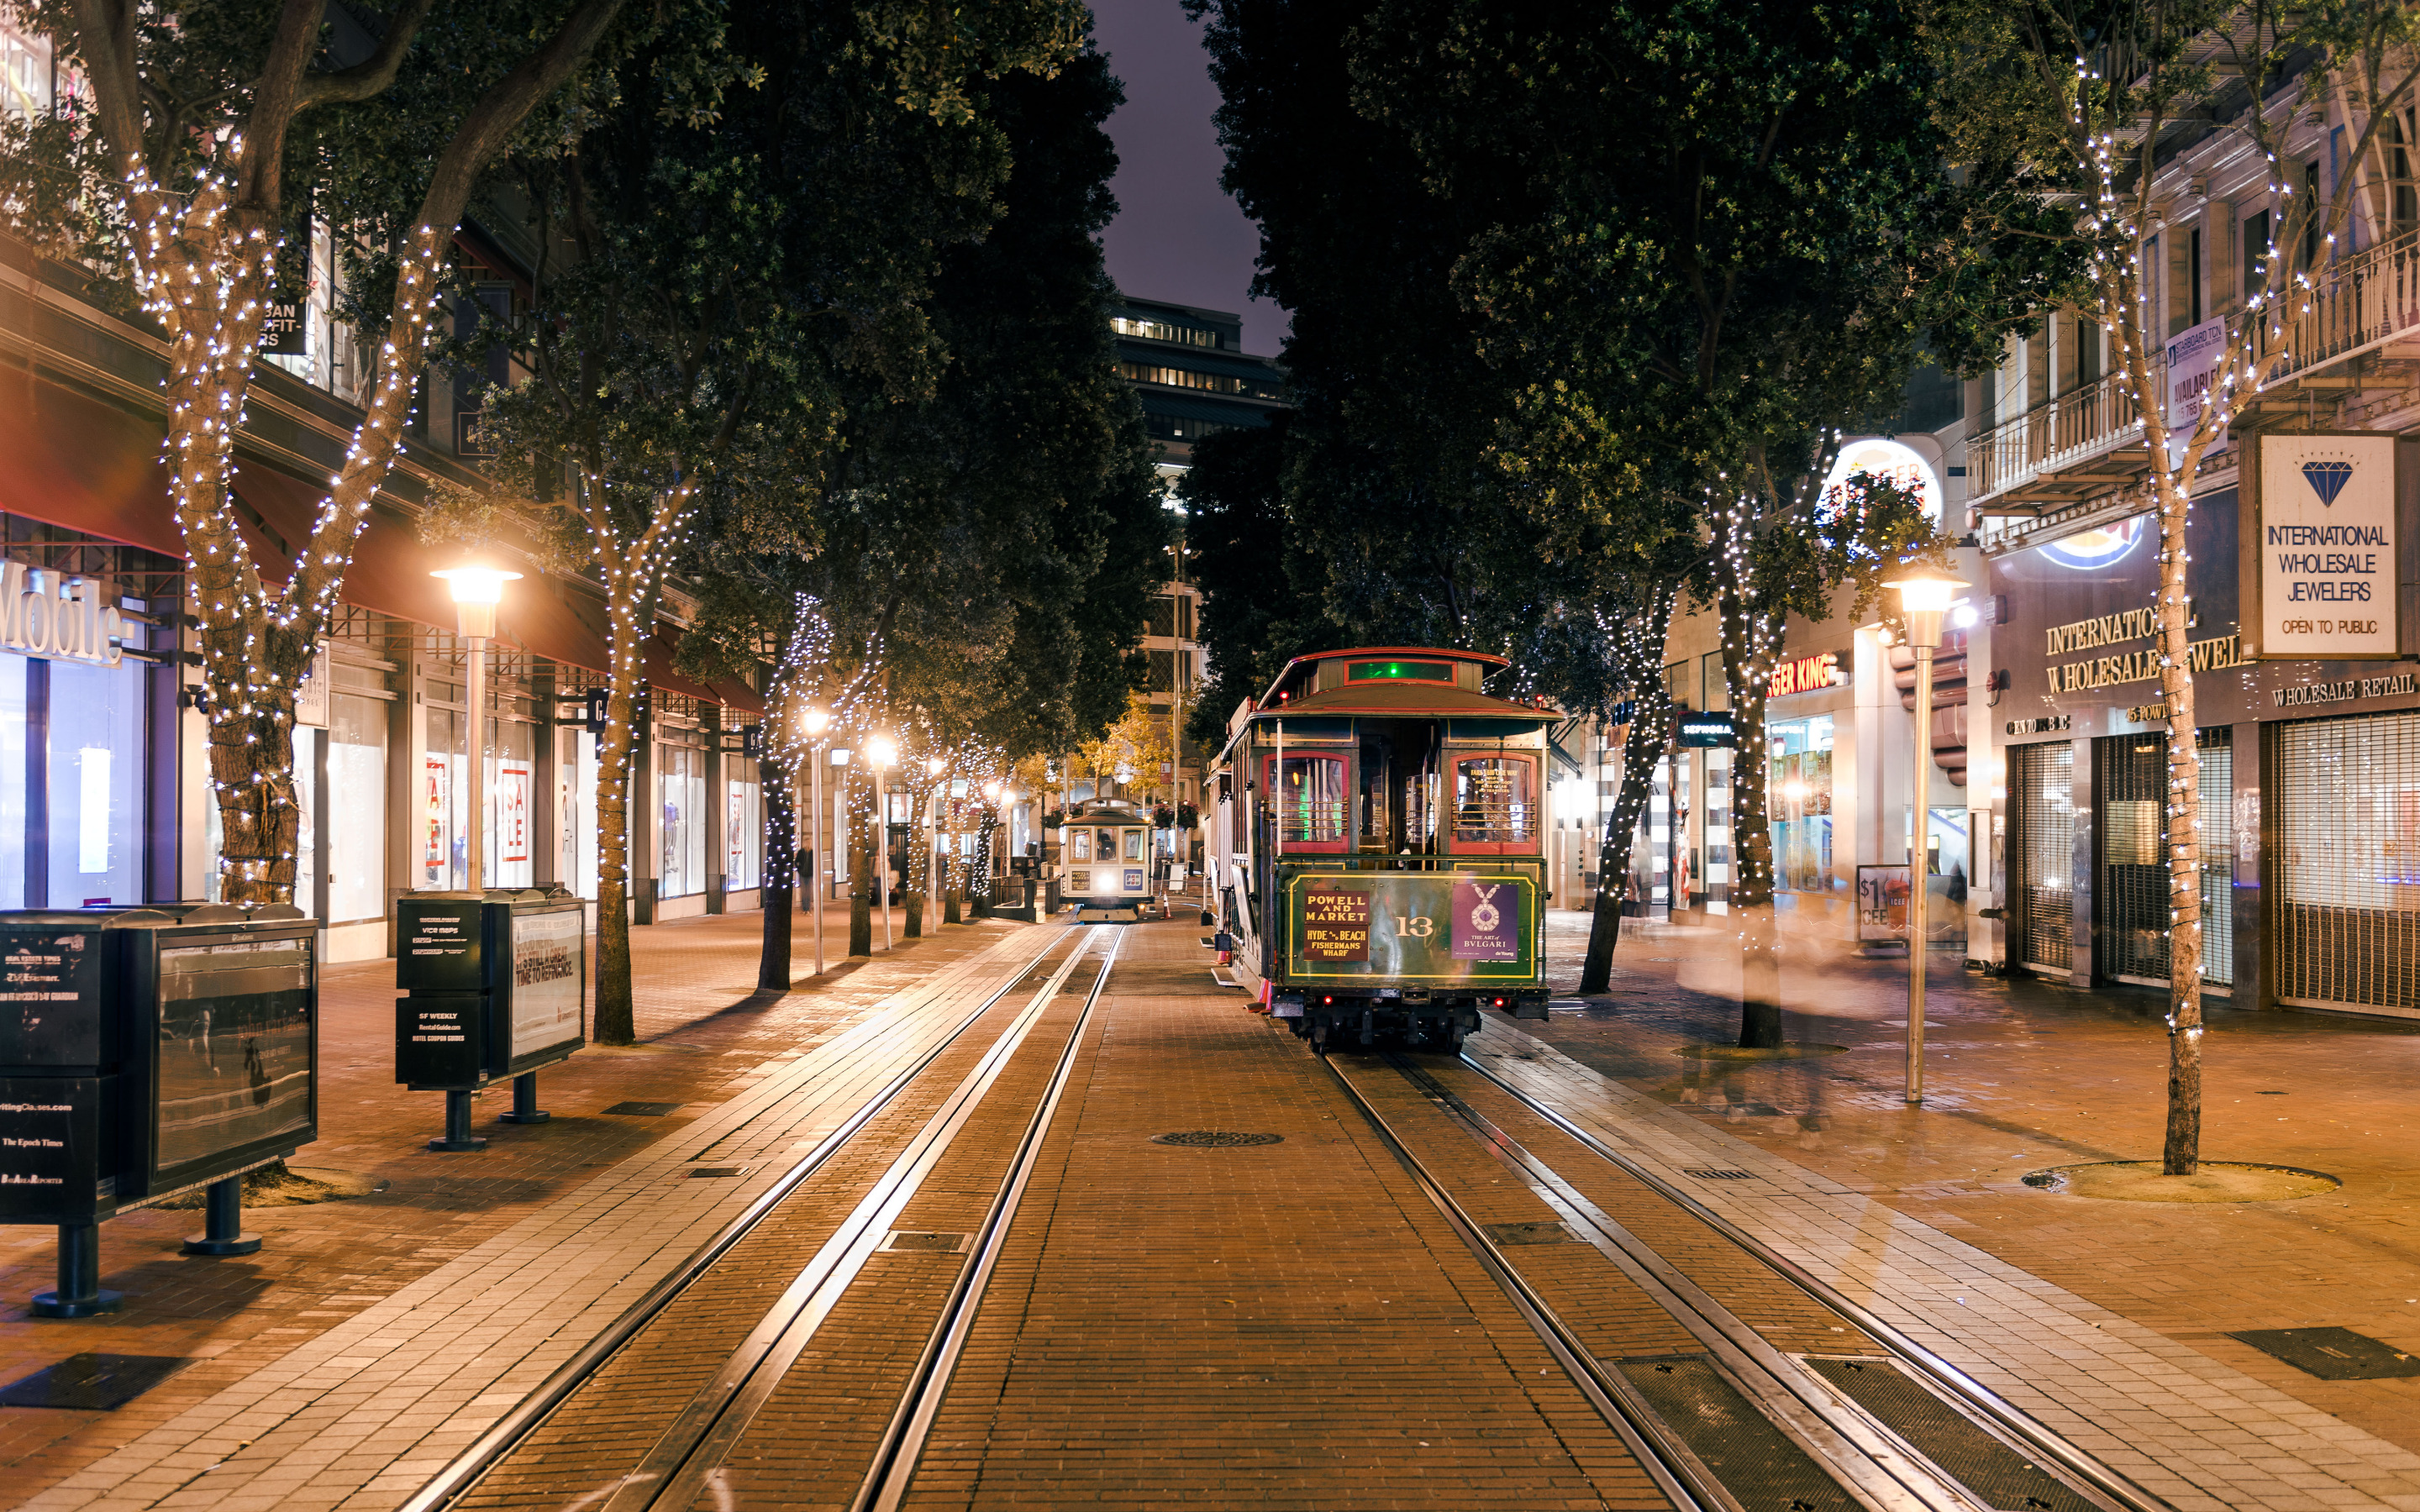 Обои на стол на улице. Трамвай в Сан-Франциско. Сан-Франциско Калифорния трамвай. Сан Франциско улицы города вечером. Сан-Франциско улицы ночью трамваи.